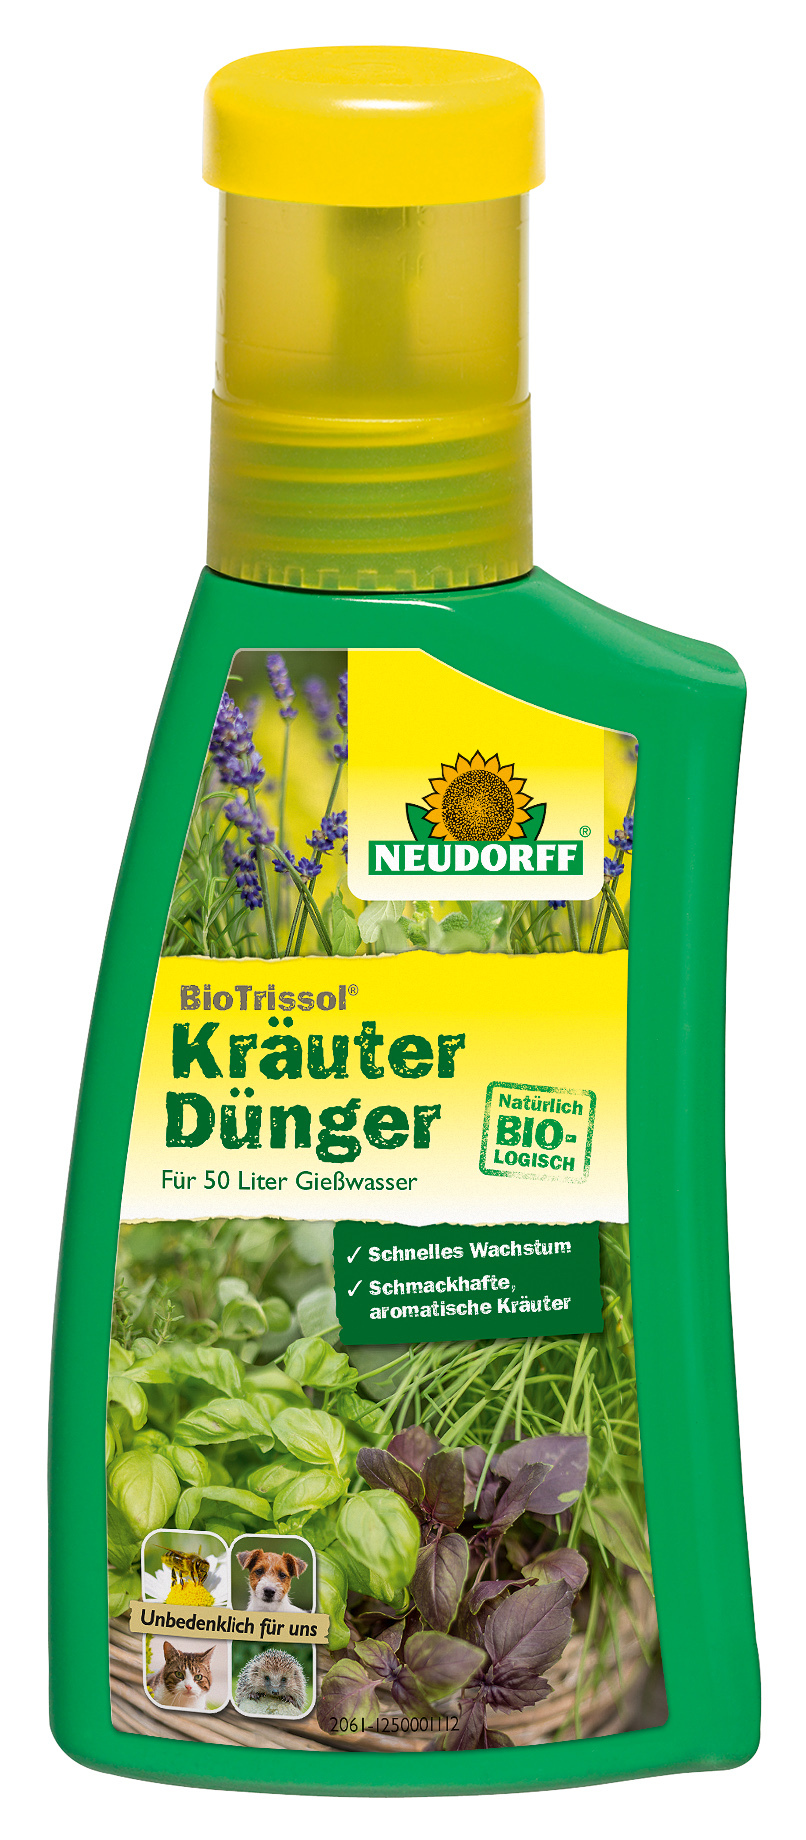 W. Neudorff GmbH KG BioTrissol Kräuterdünger